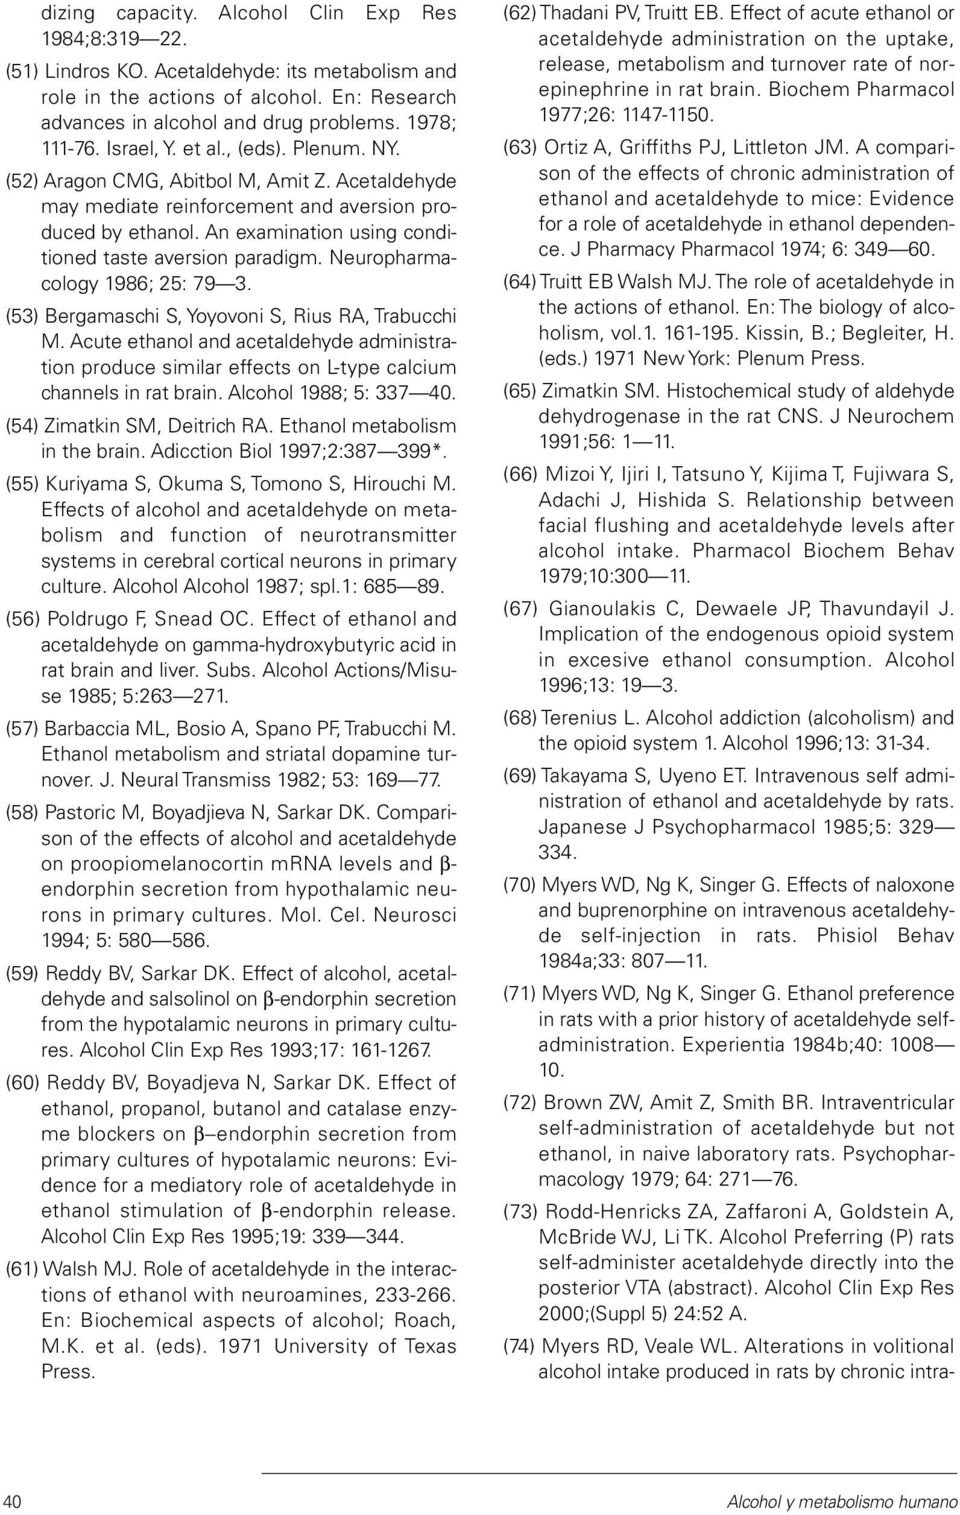 An examination using conditioned taste aversion paradigm. Neuropharmacology 1986; 25: 79 3. (53) Bergamaschi S, Yoyovoni S, Rius RA, Trabucchi M.